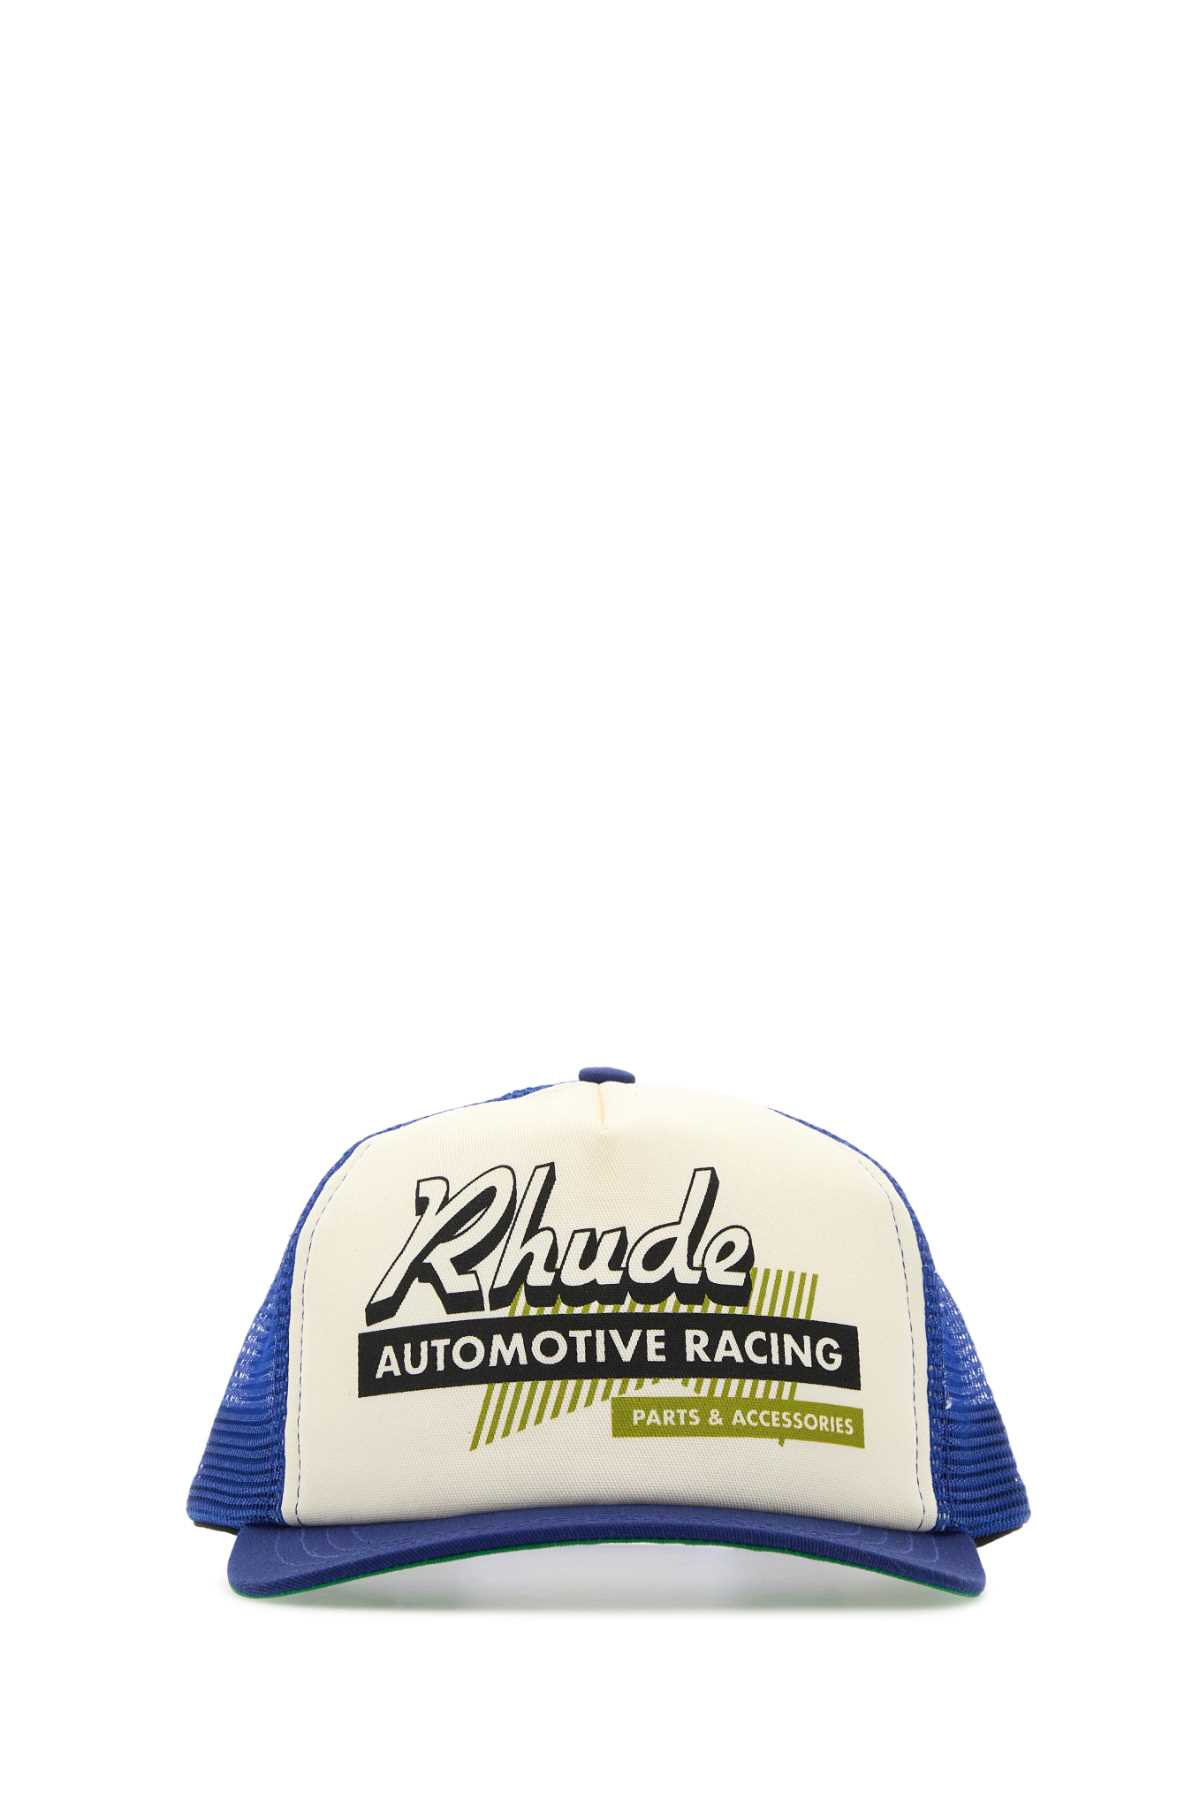 Rhude Two-tone Polyester Blend Auto Racing Baseball Cap